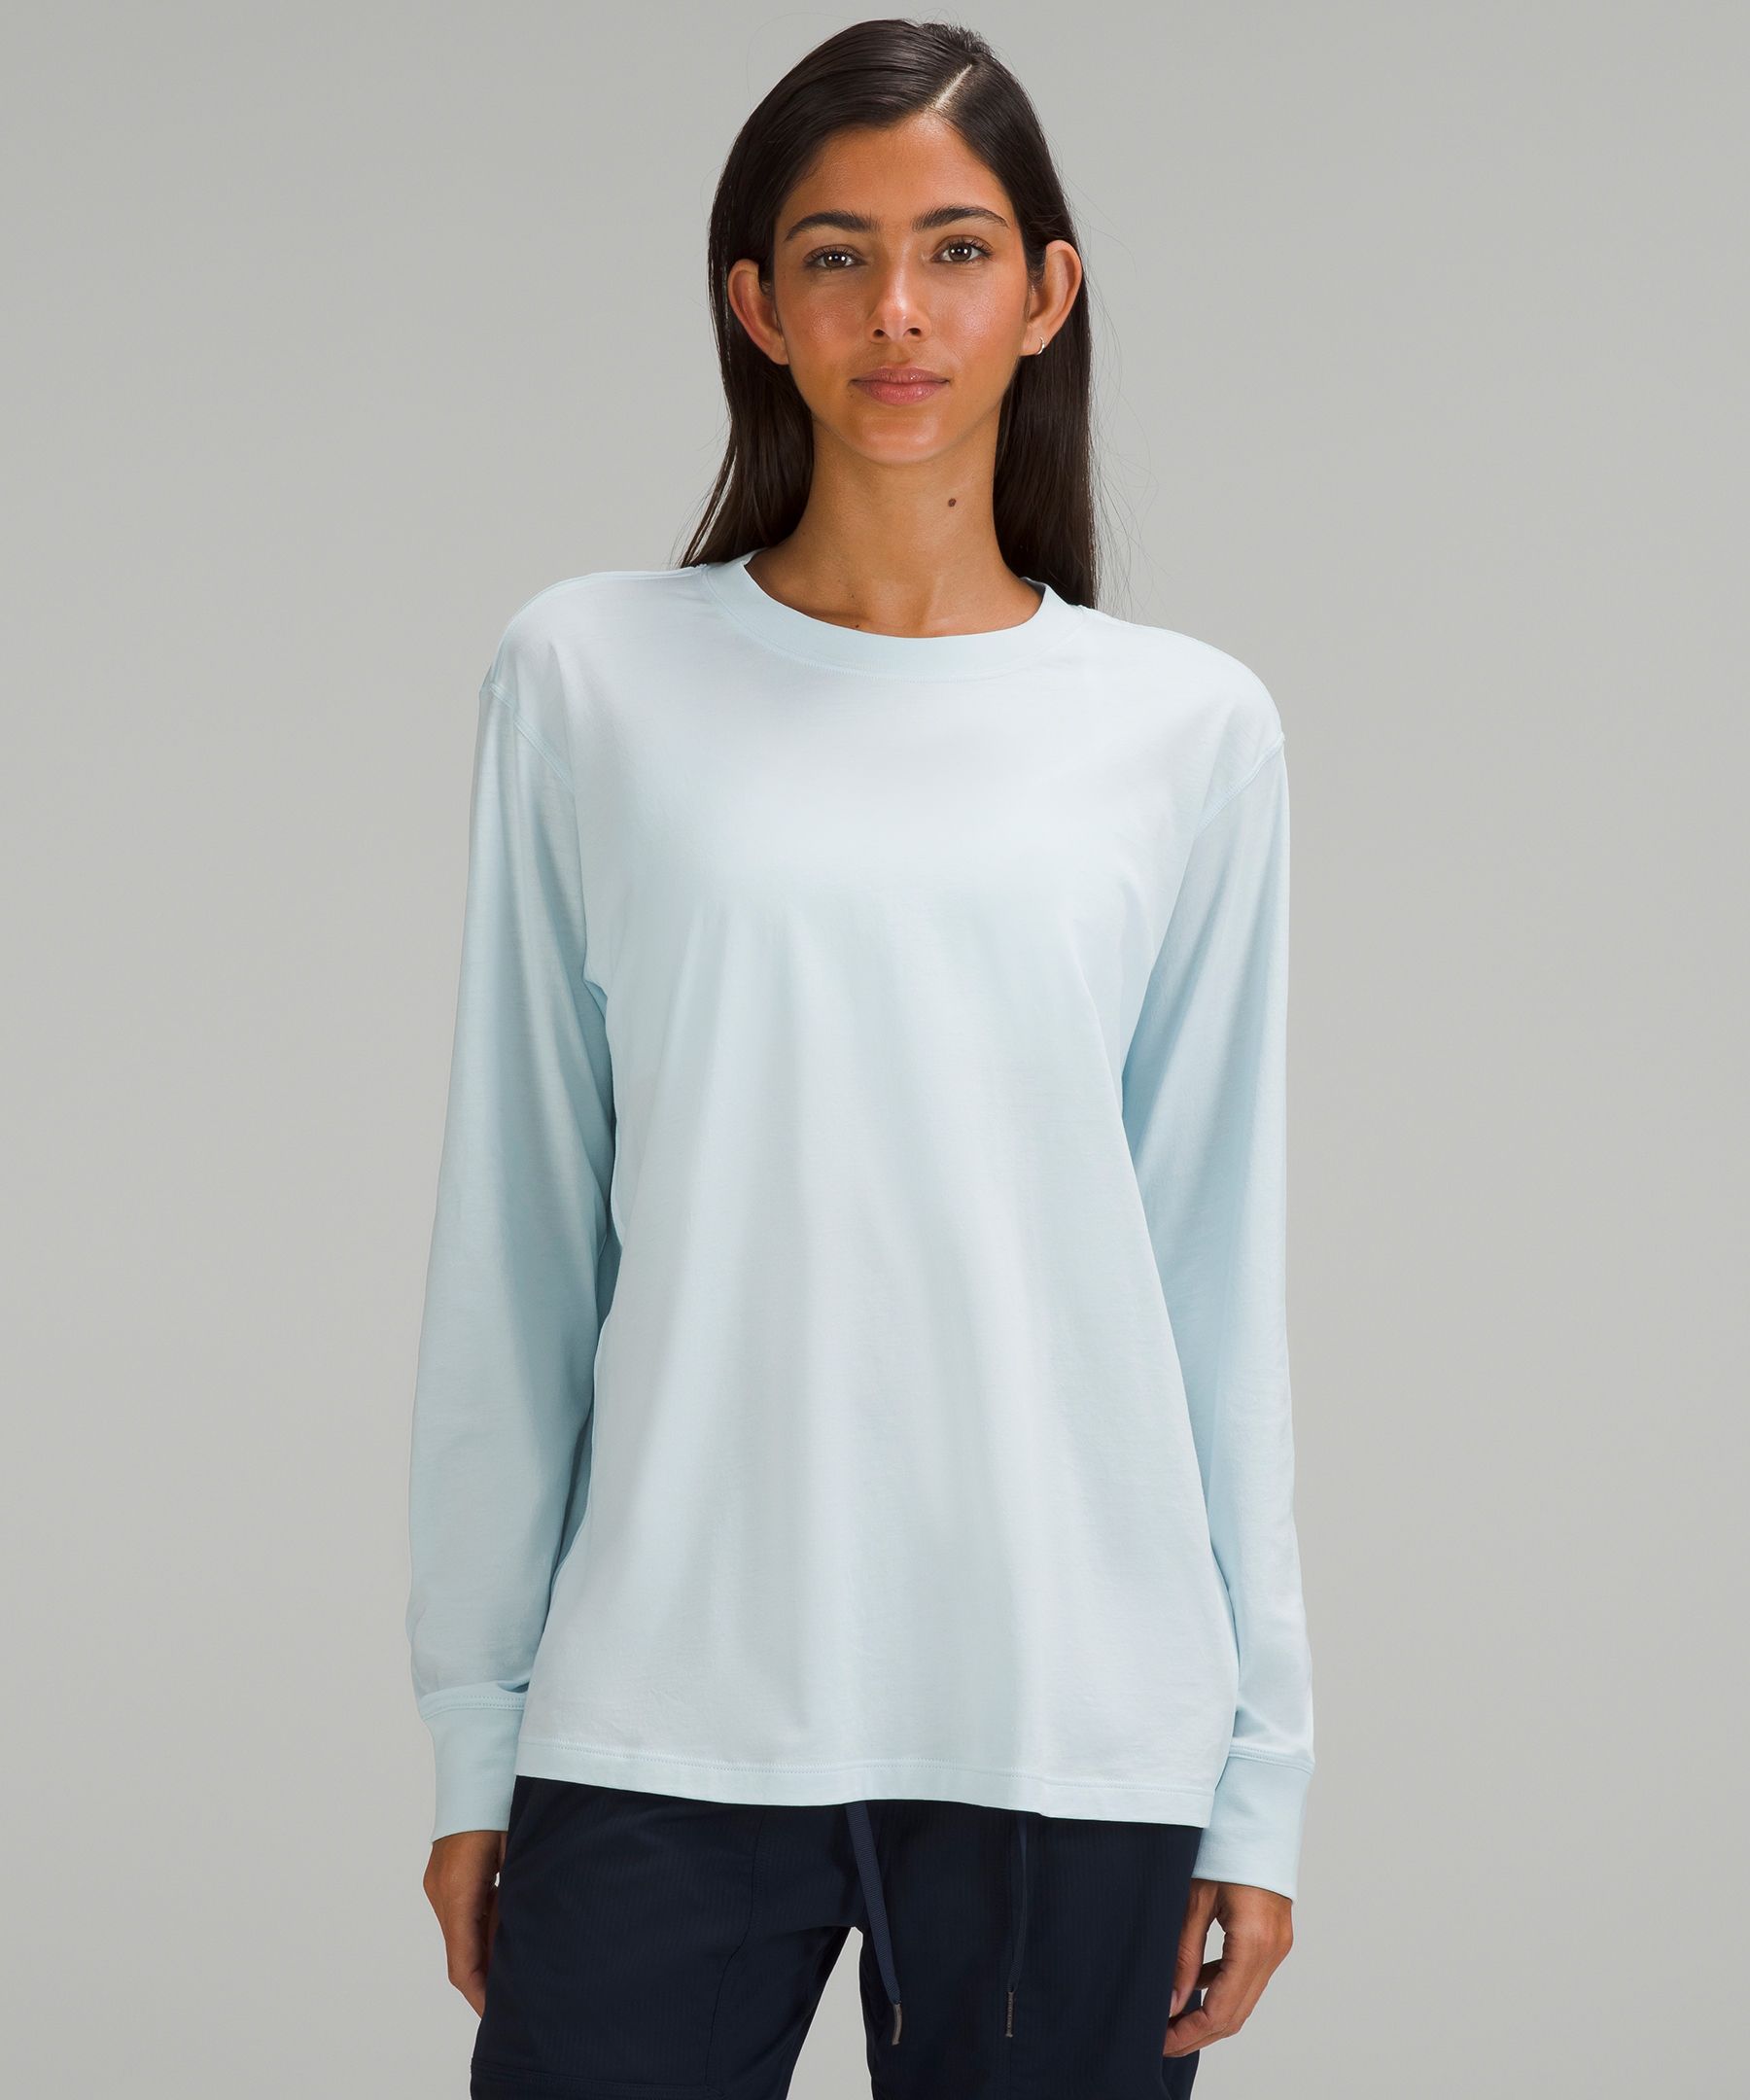 Women's Long Sleeve Shirts lululemon